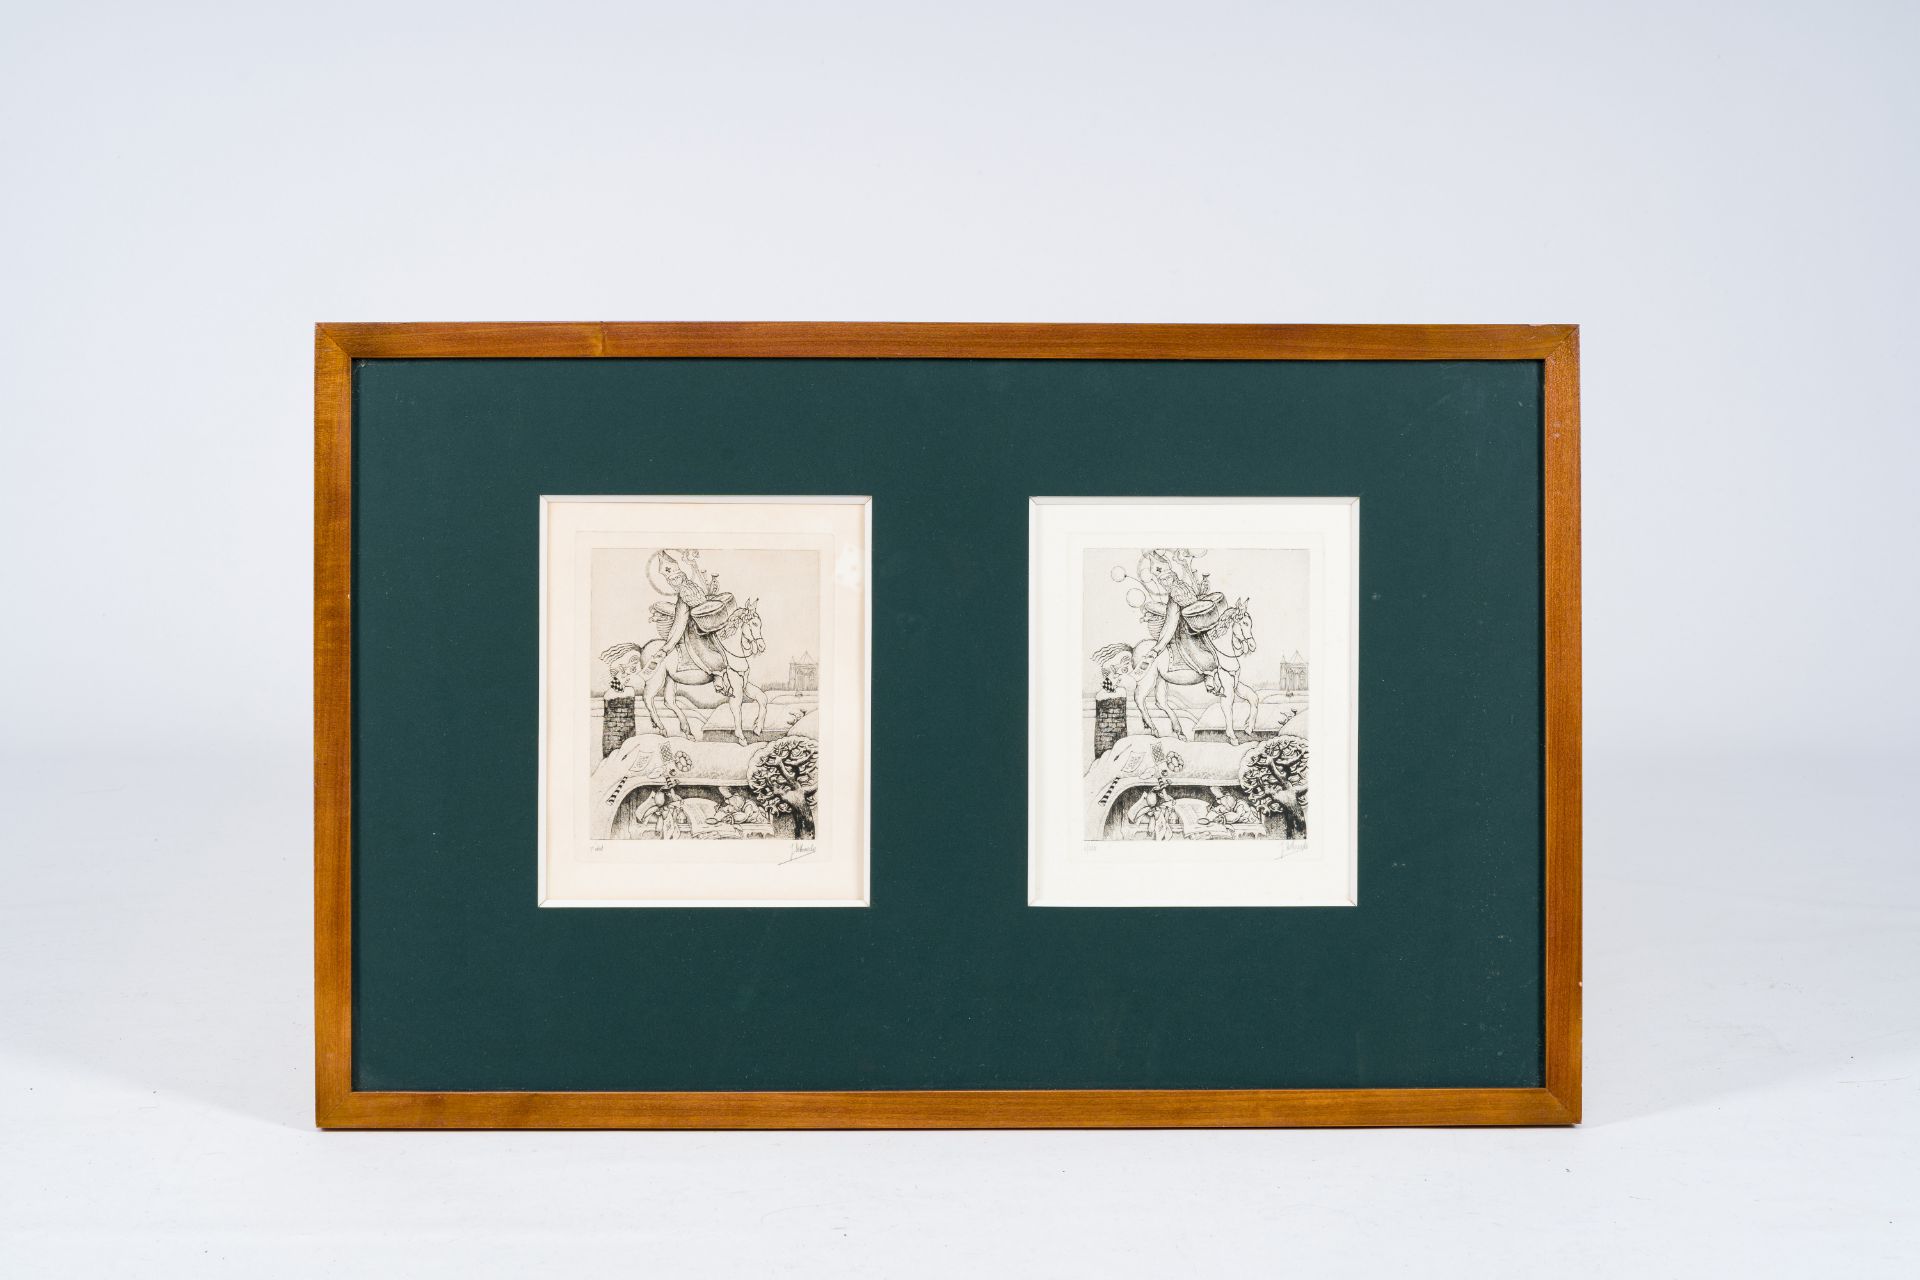 Jules De Bruycker (1870-1945): 'De gulle Sint', etchings, ed. '1r etat' and 2/260, (1938)